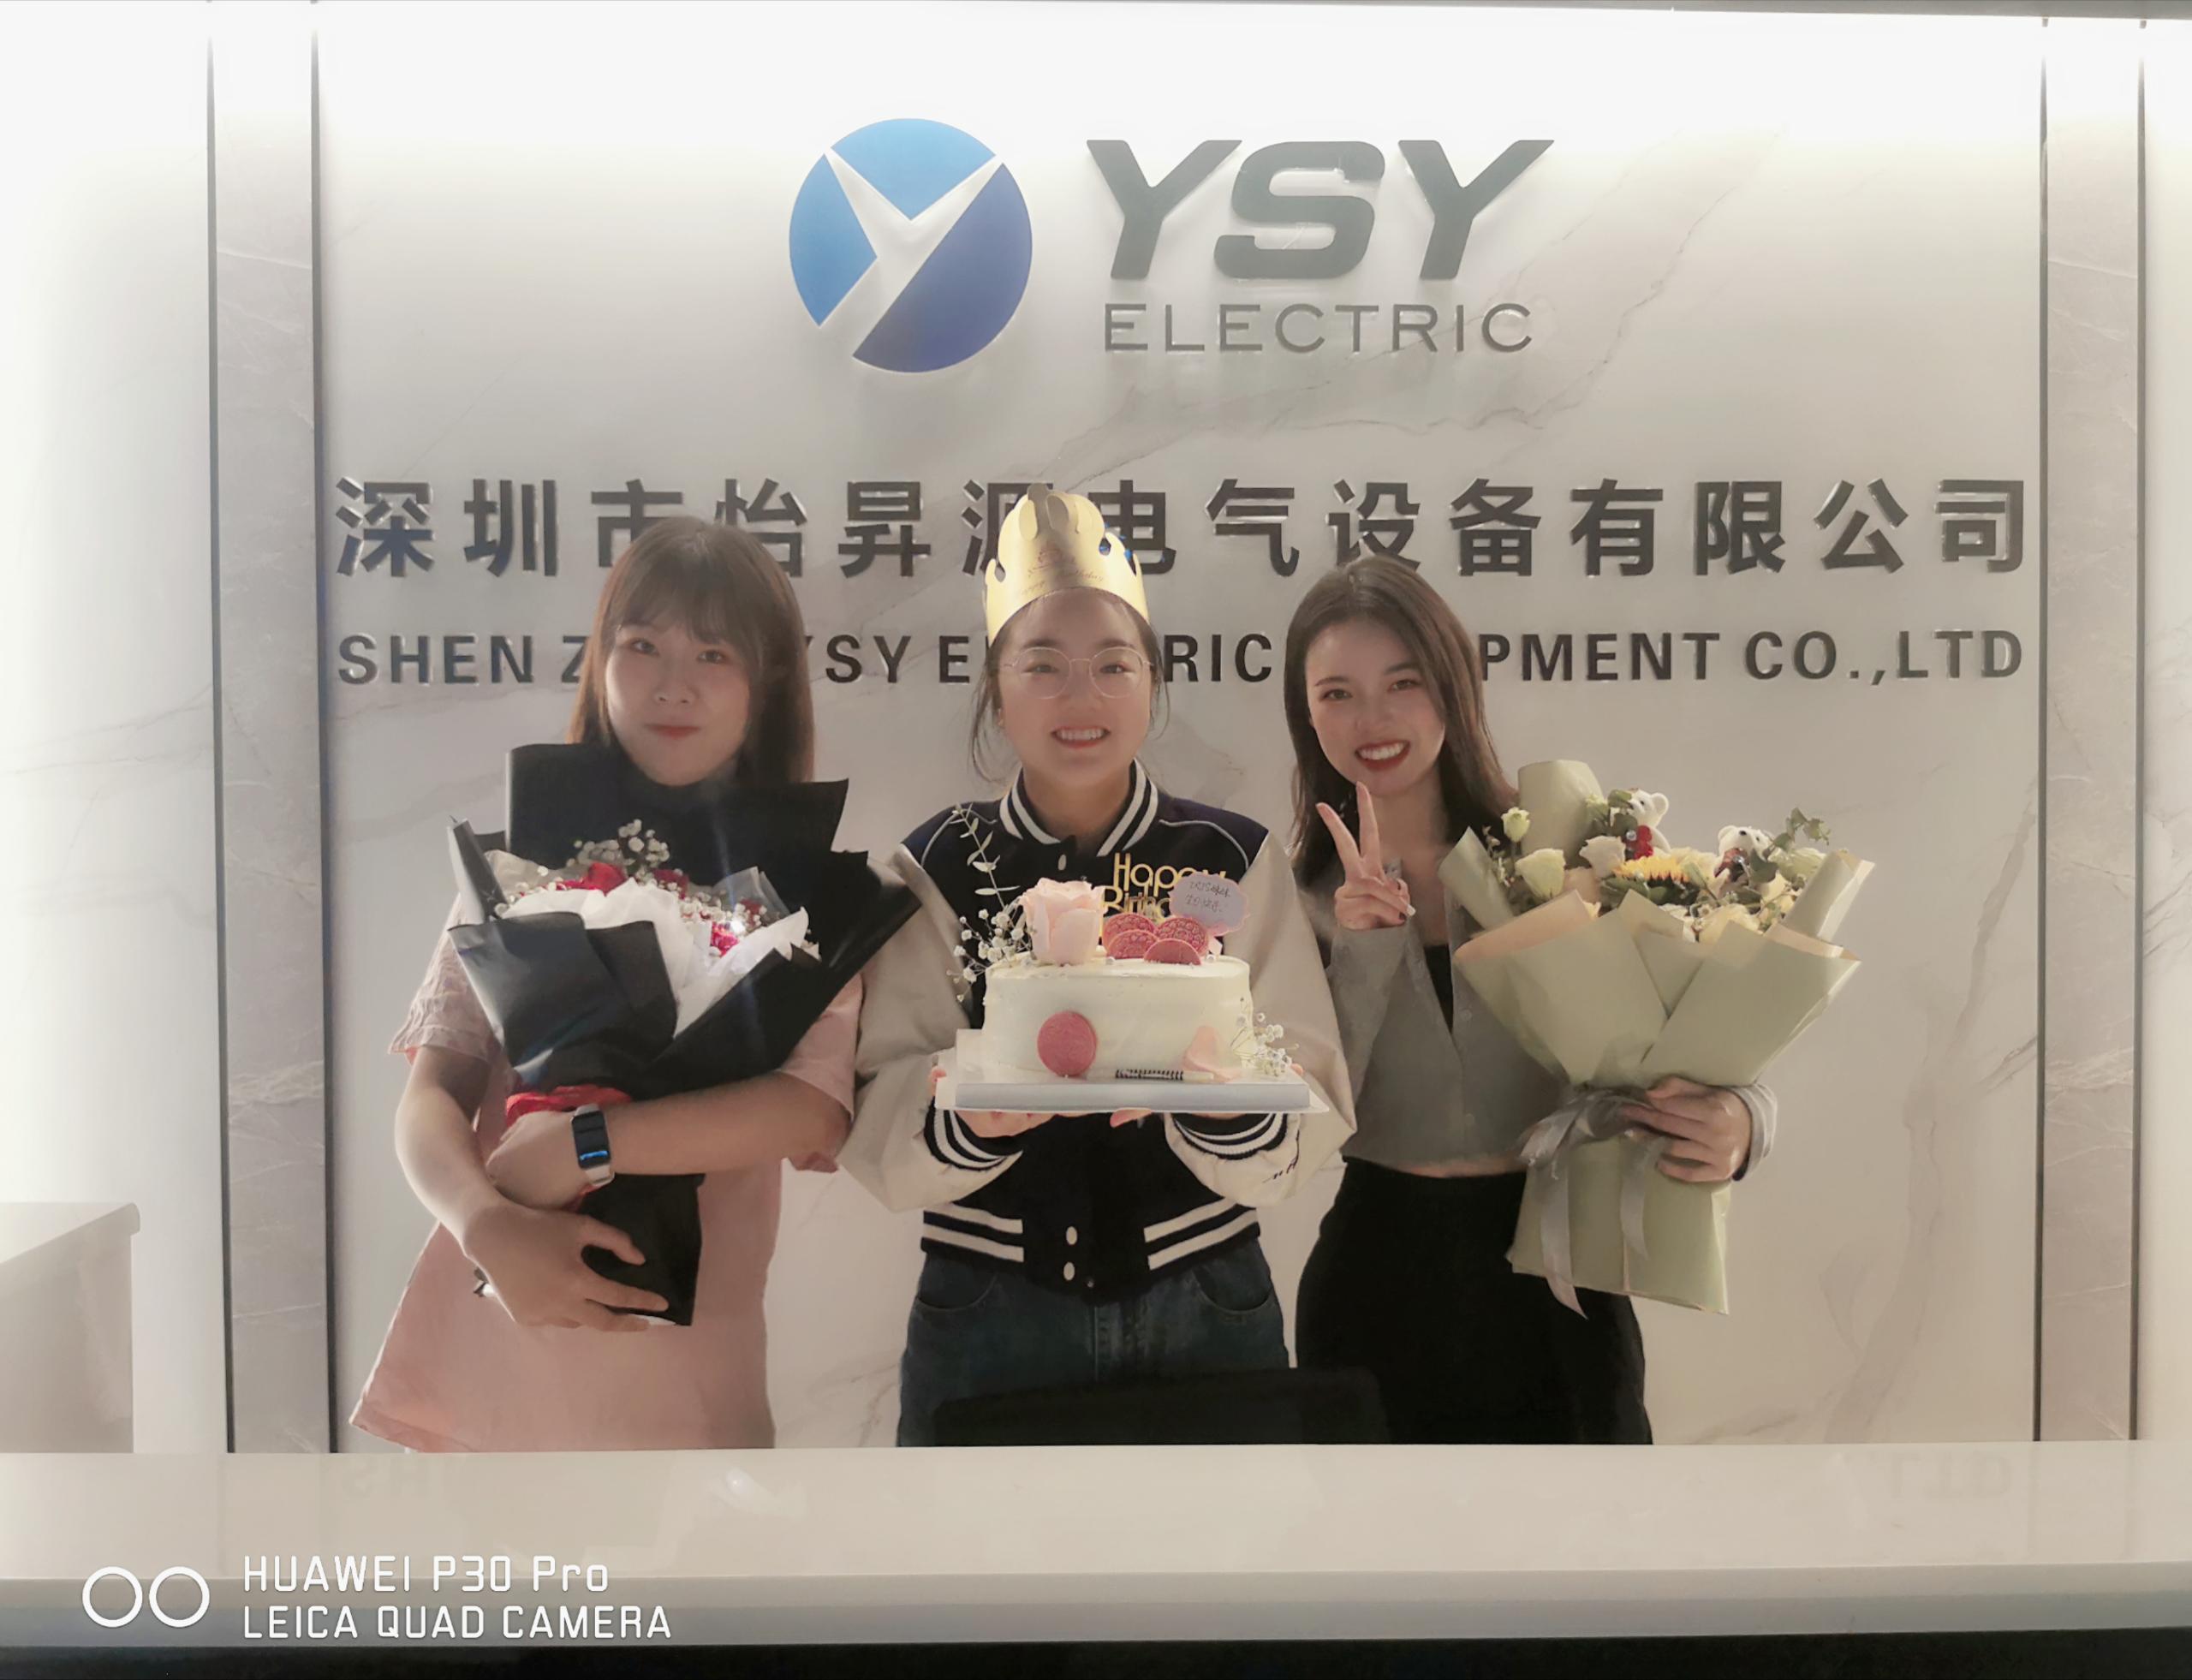 Sretan rođendan 2 prodaje YSY Electrica!